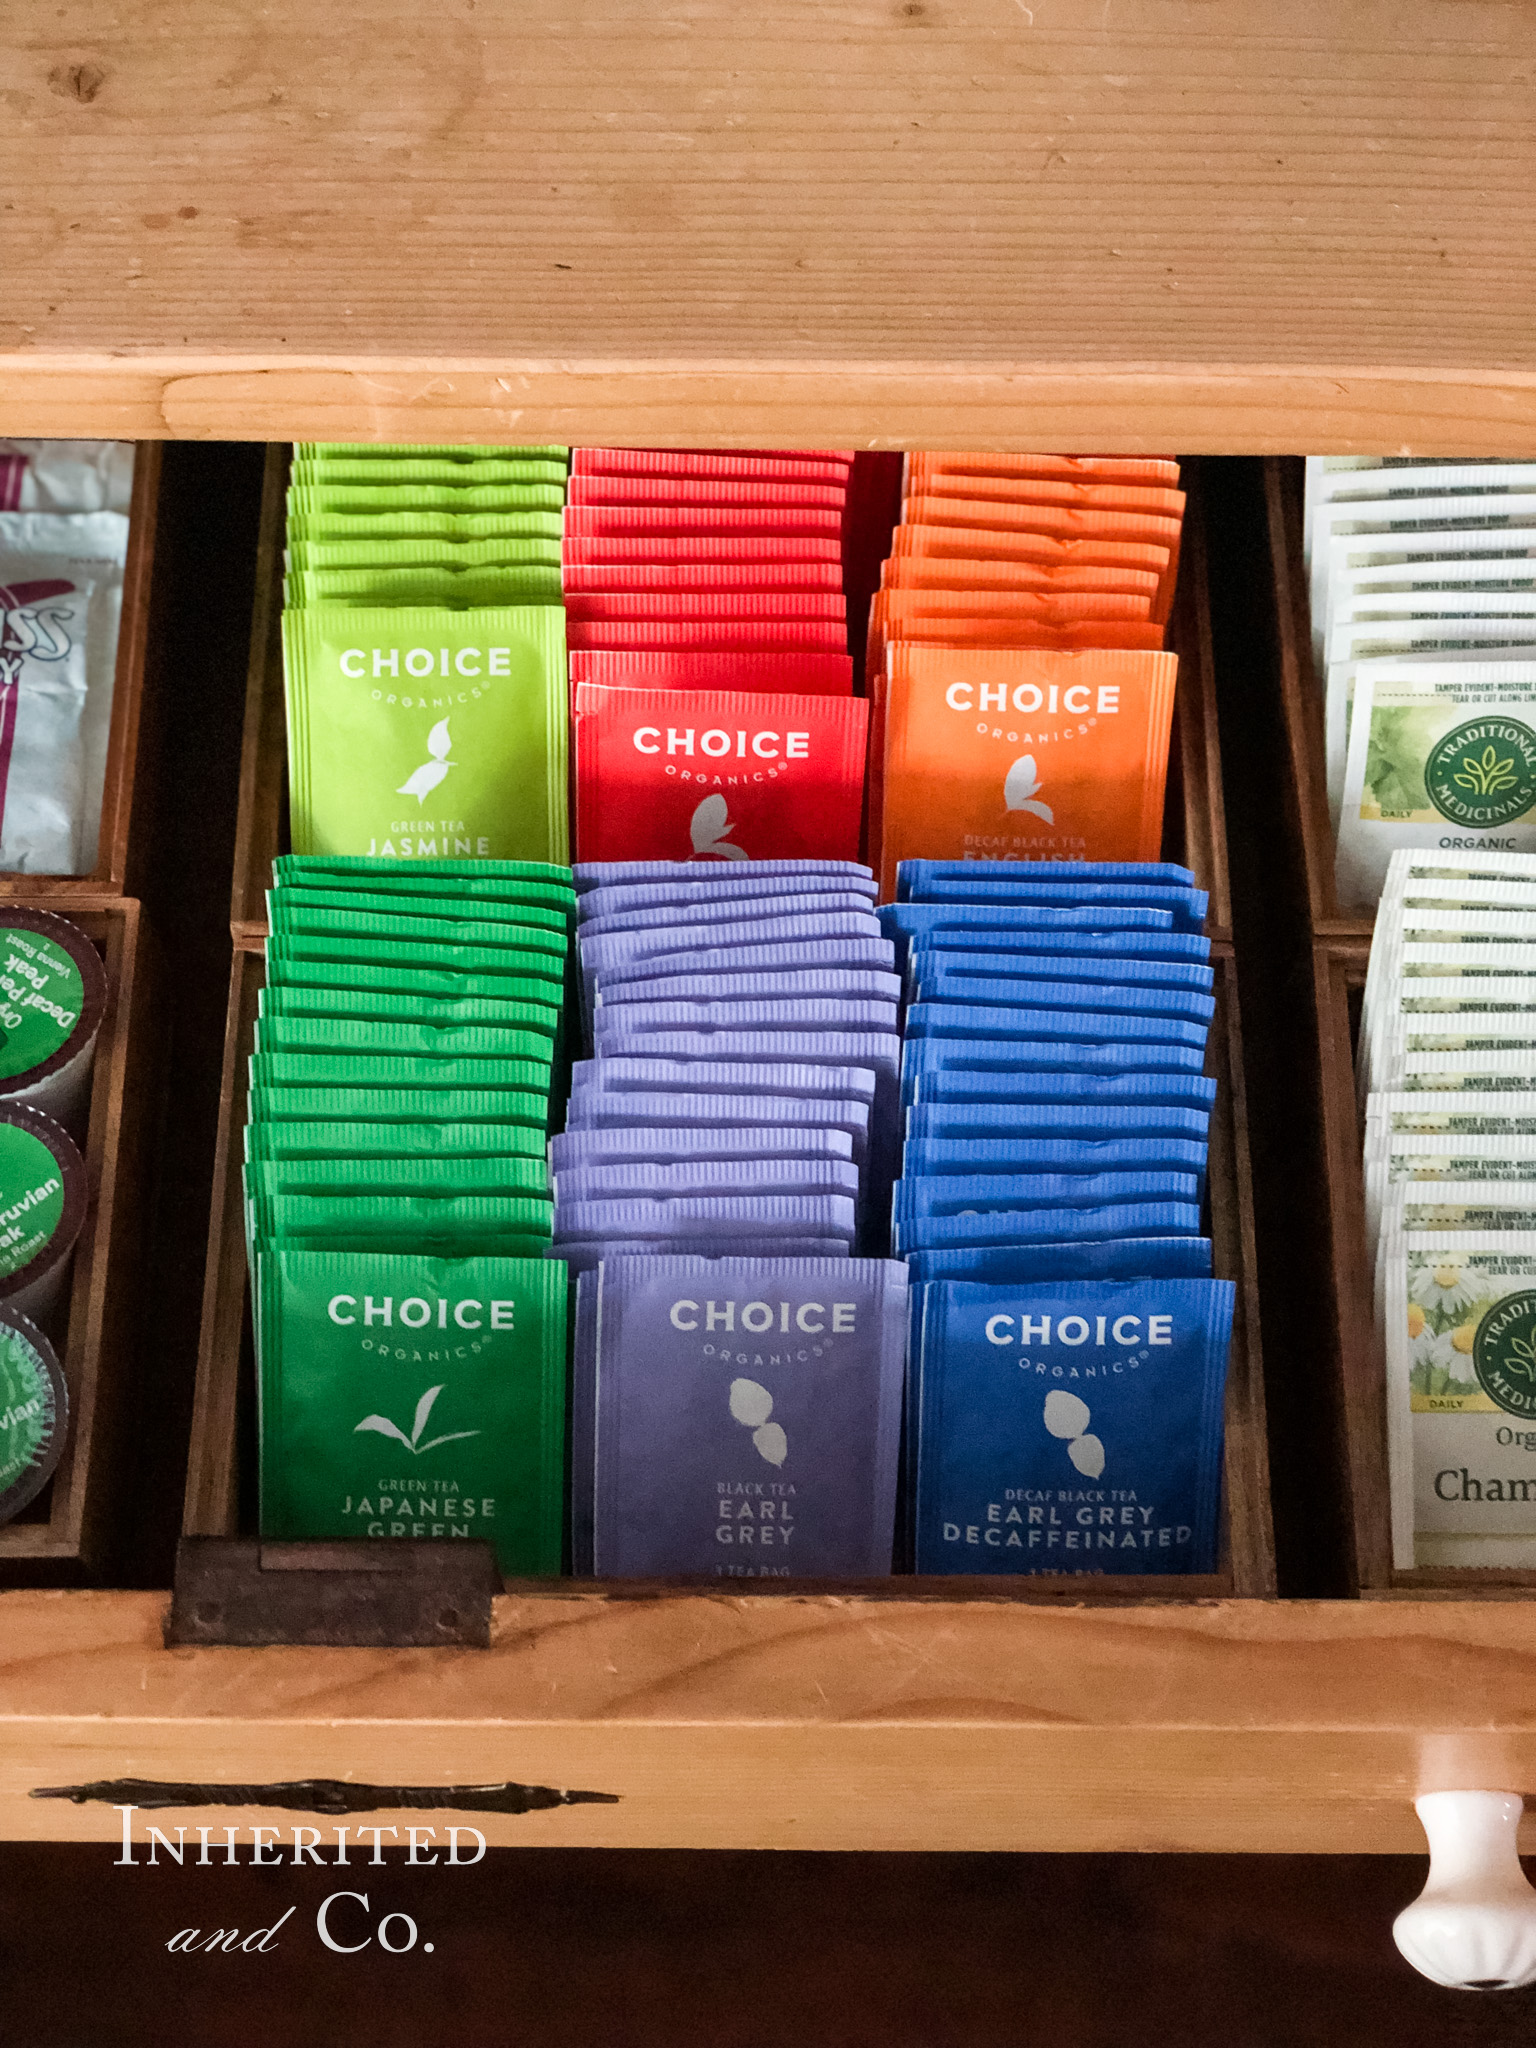 Choice Organics teas organized in a drawer of an antique cabinet